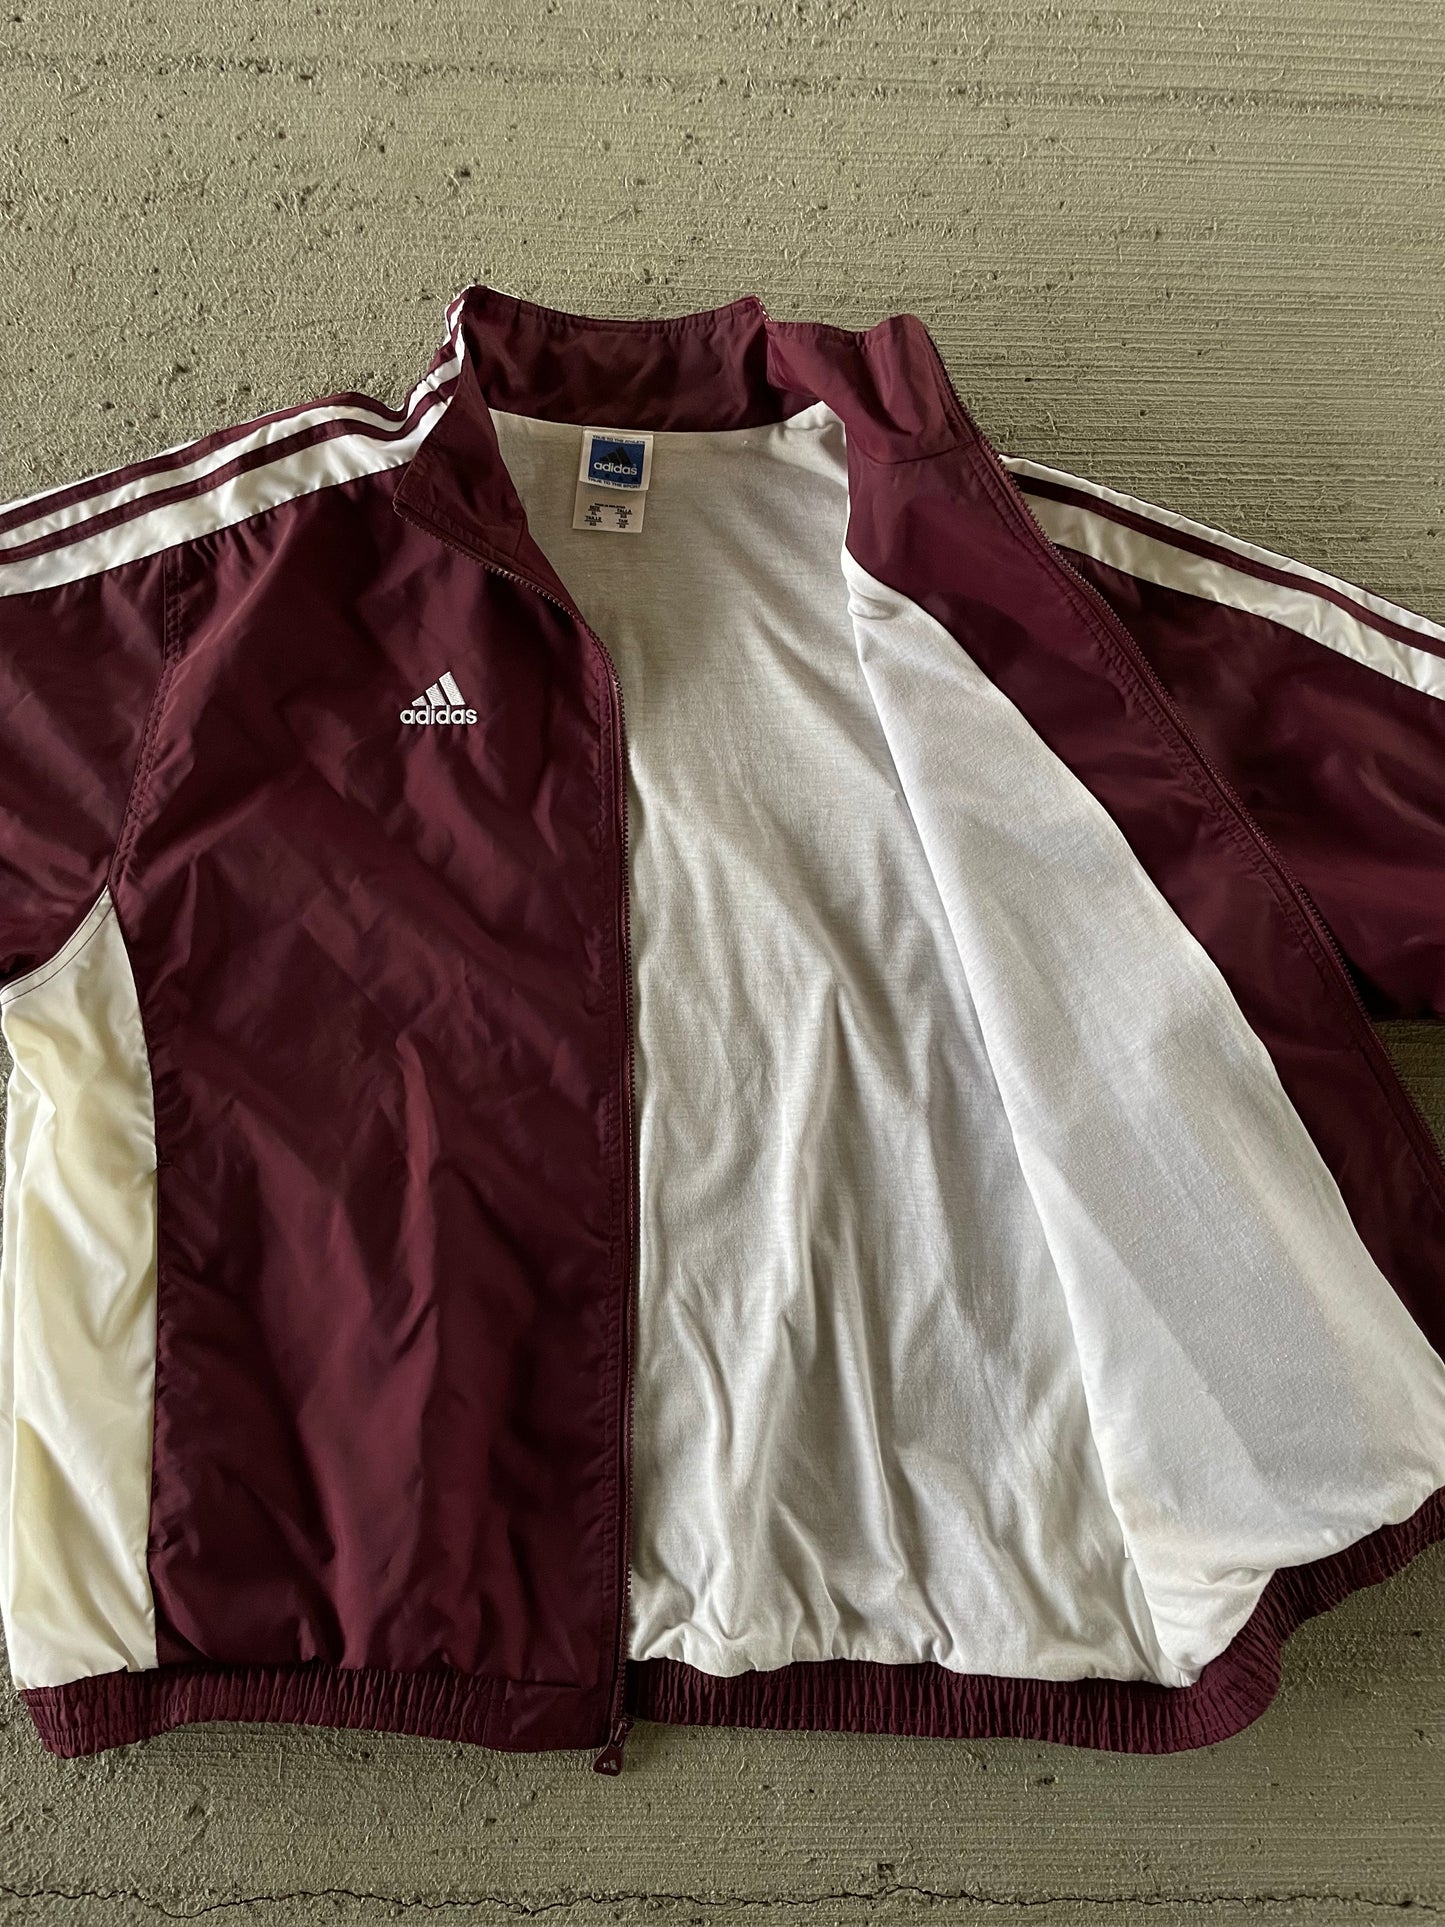 2001 Adidas Jacket